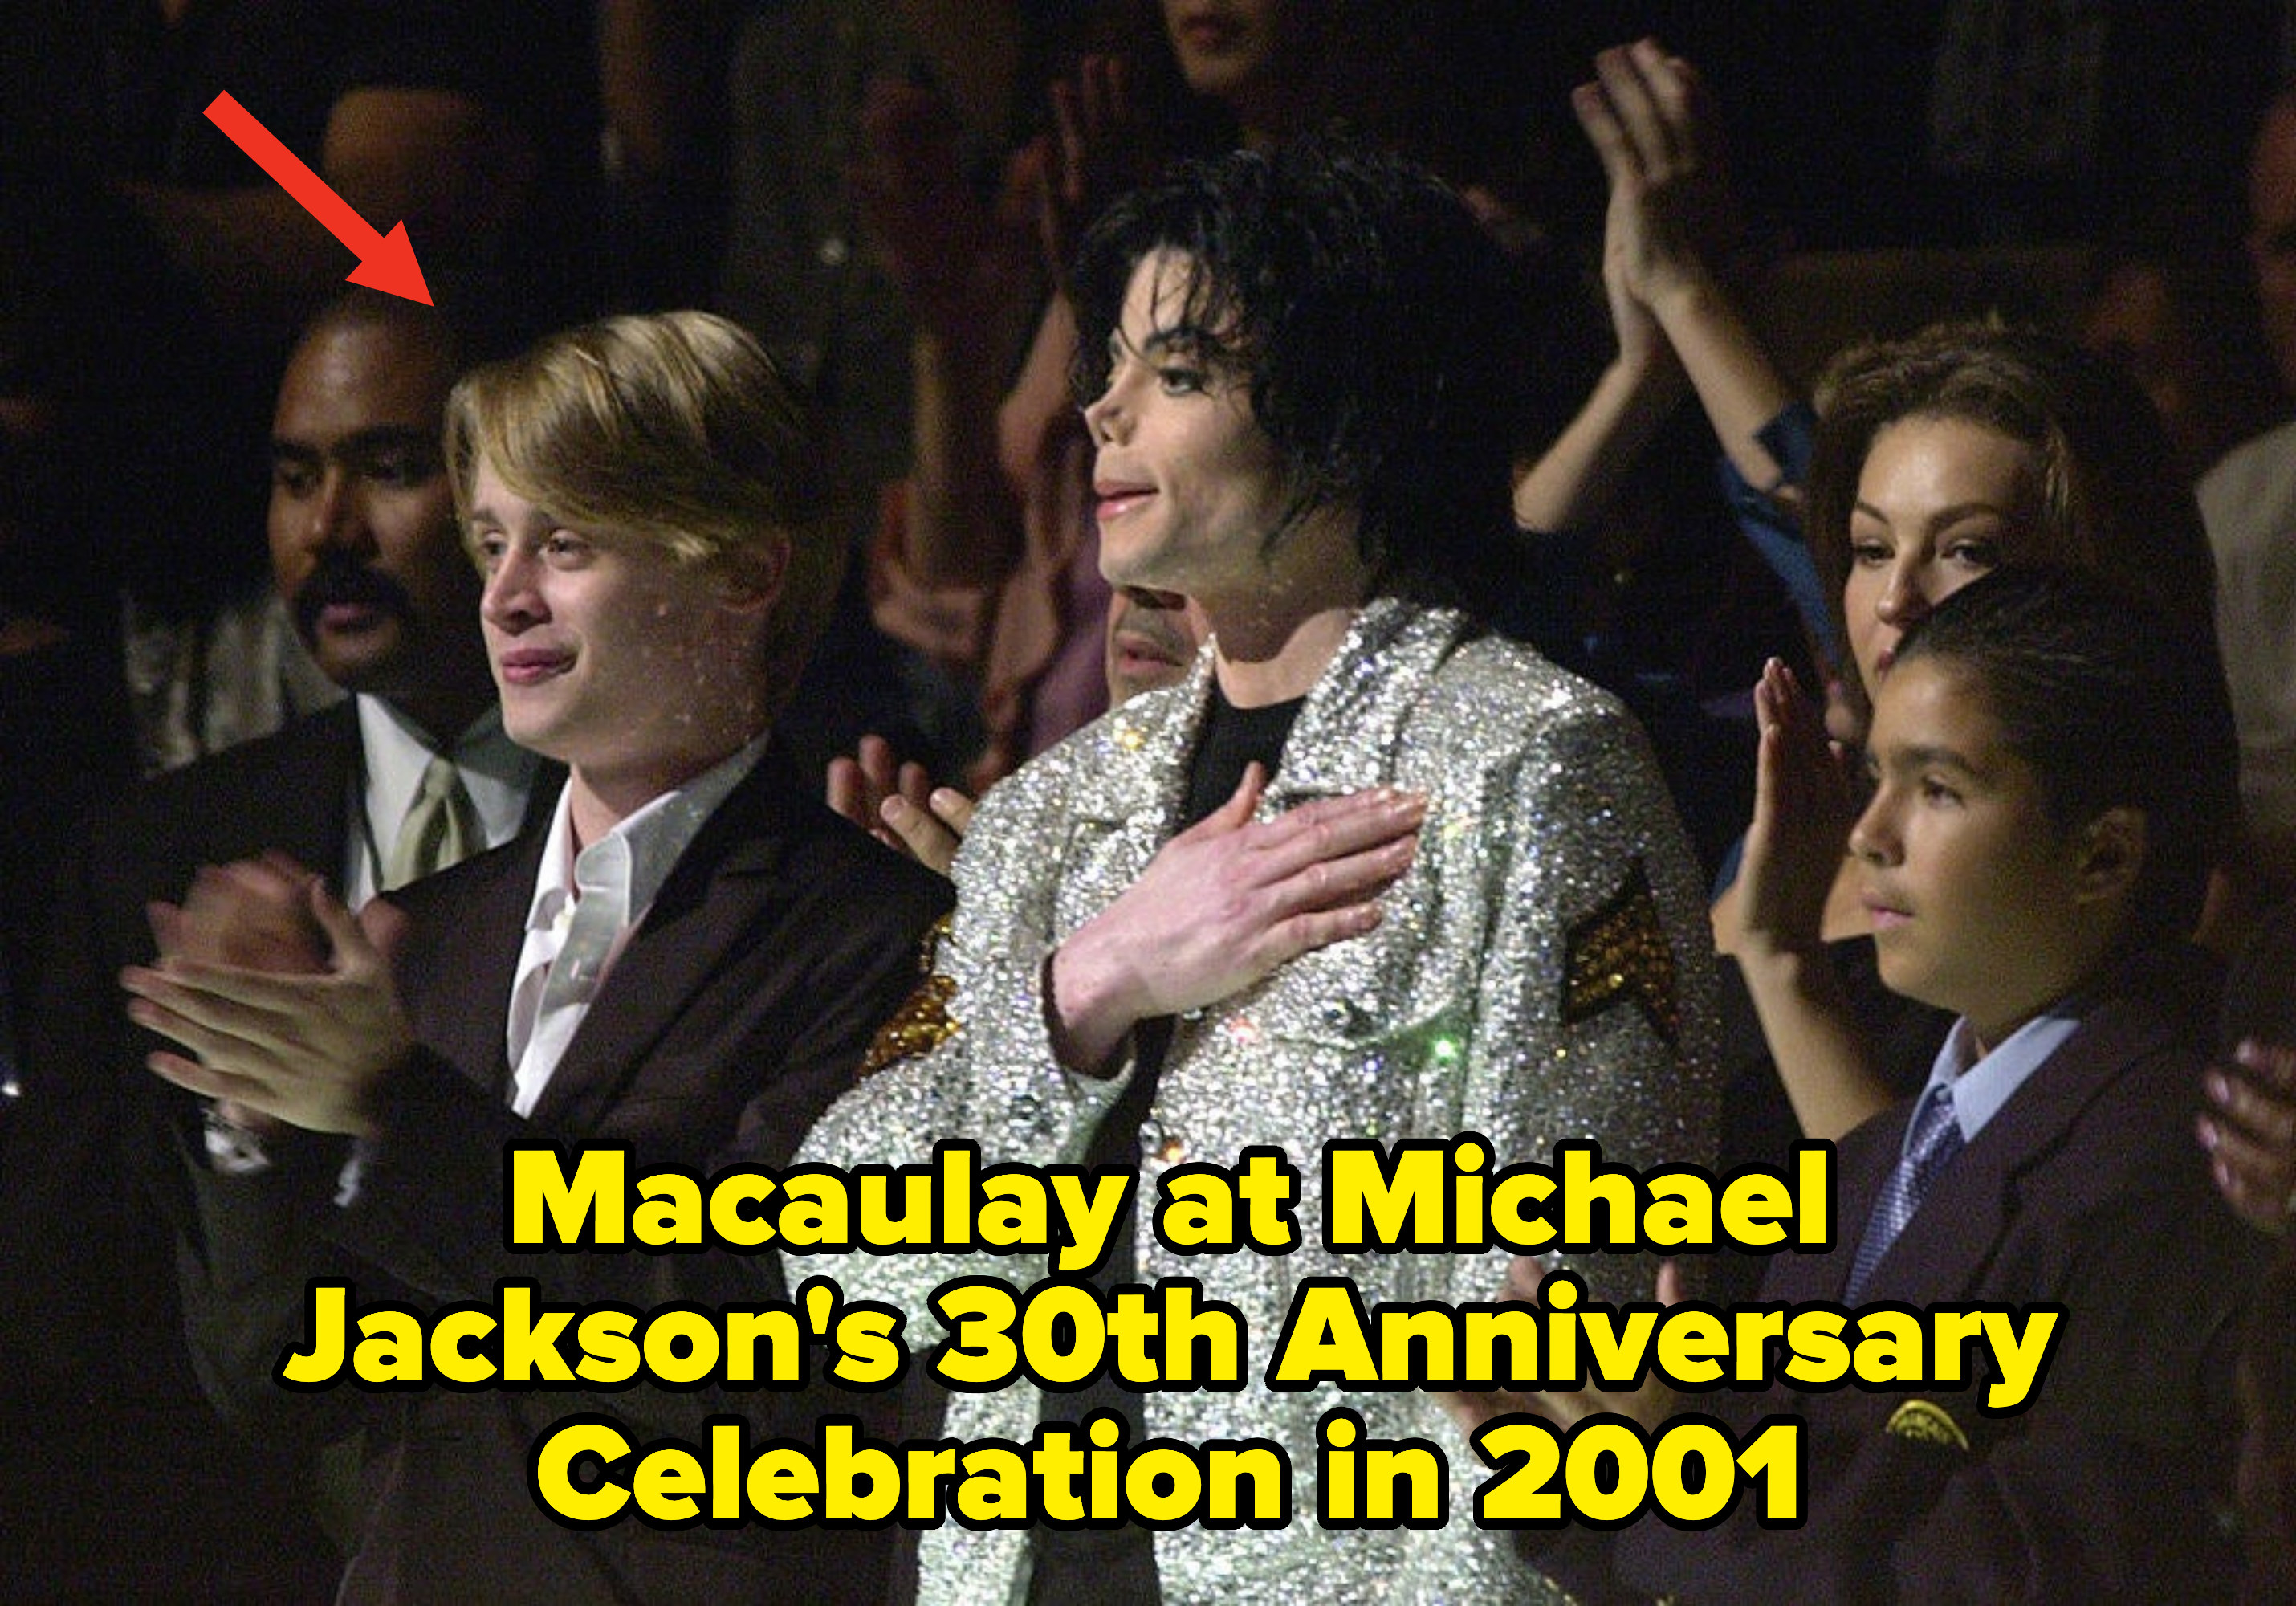 Macaulay standing next to Michael Jackson